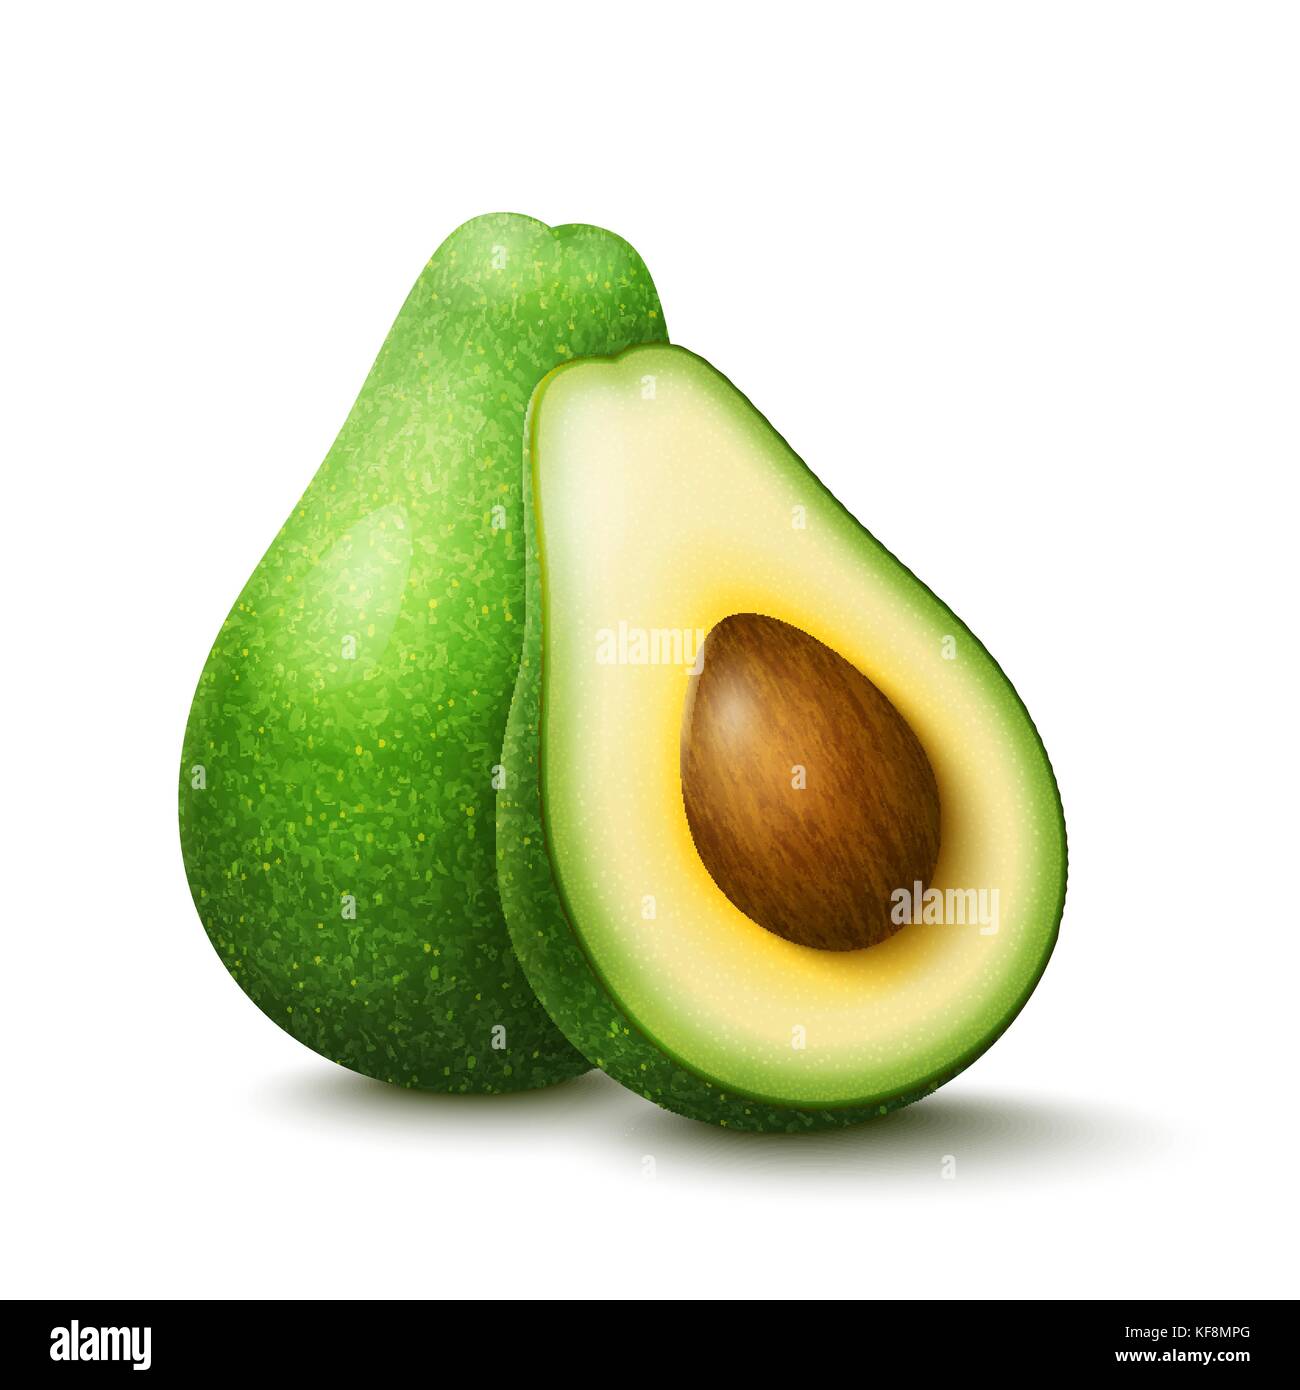 https://c8.alamy.com/comp/KF8MPG/vector-realistic-fresh-fruit-avocado-isolated-on-white-background-KF8MPG.jpg